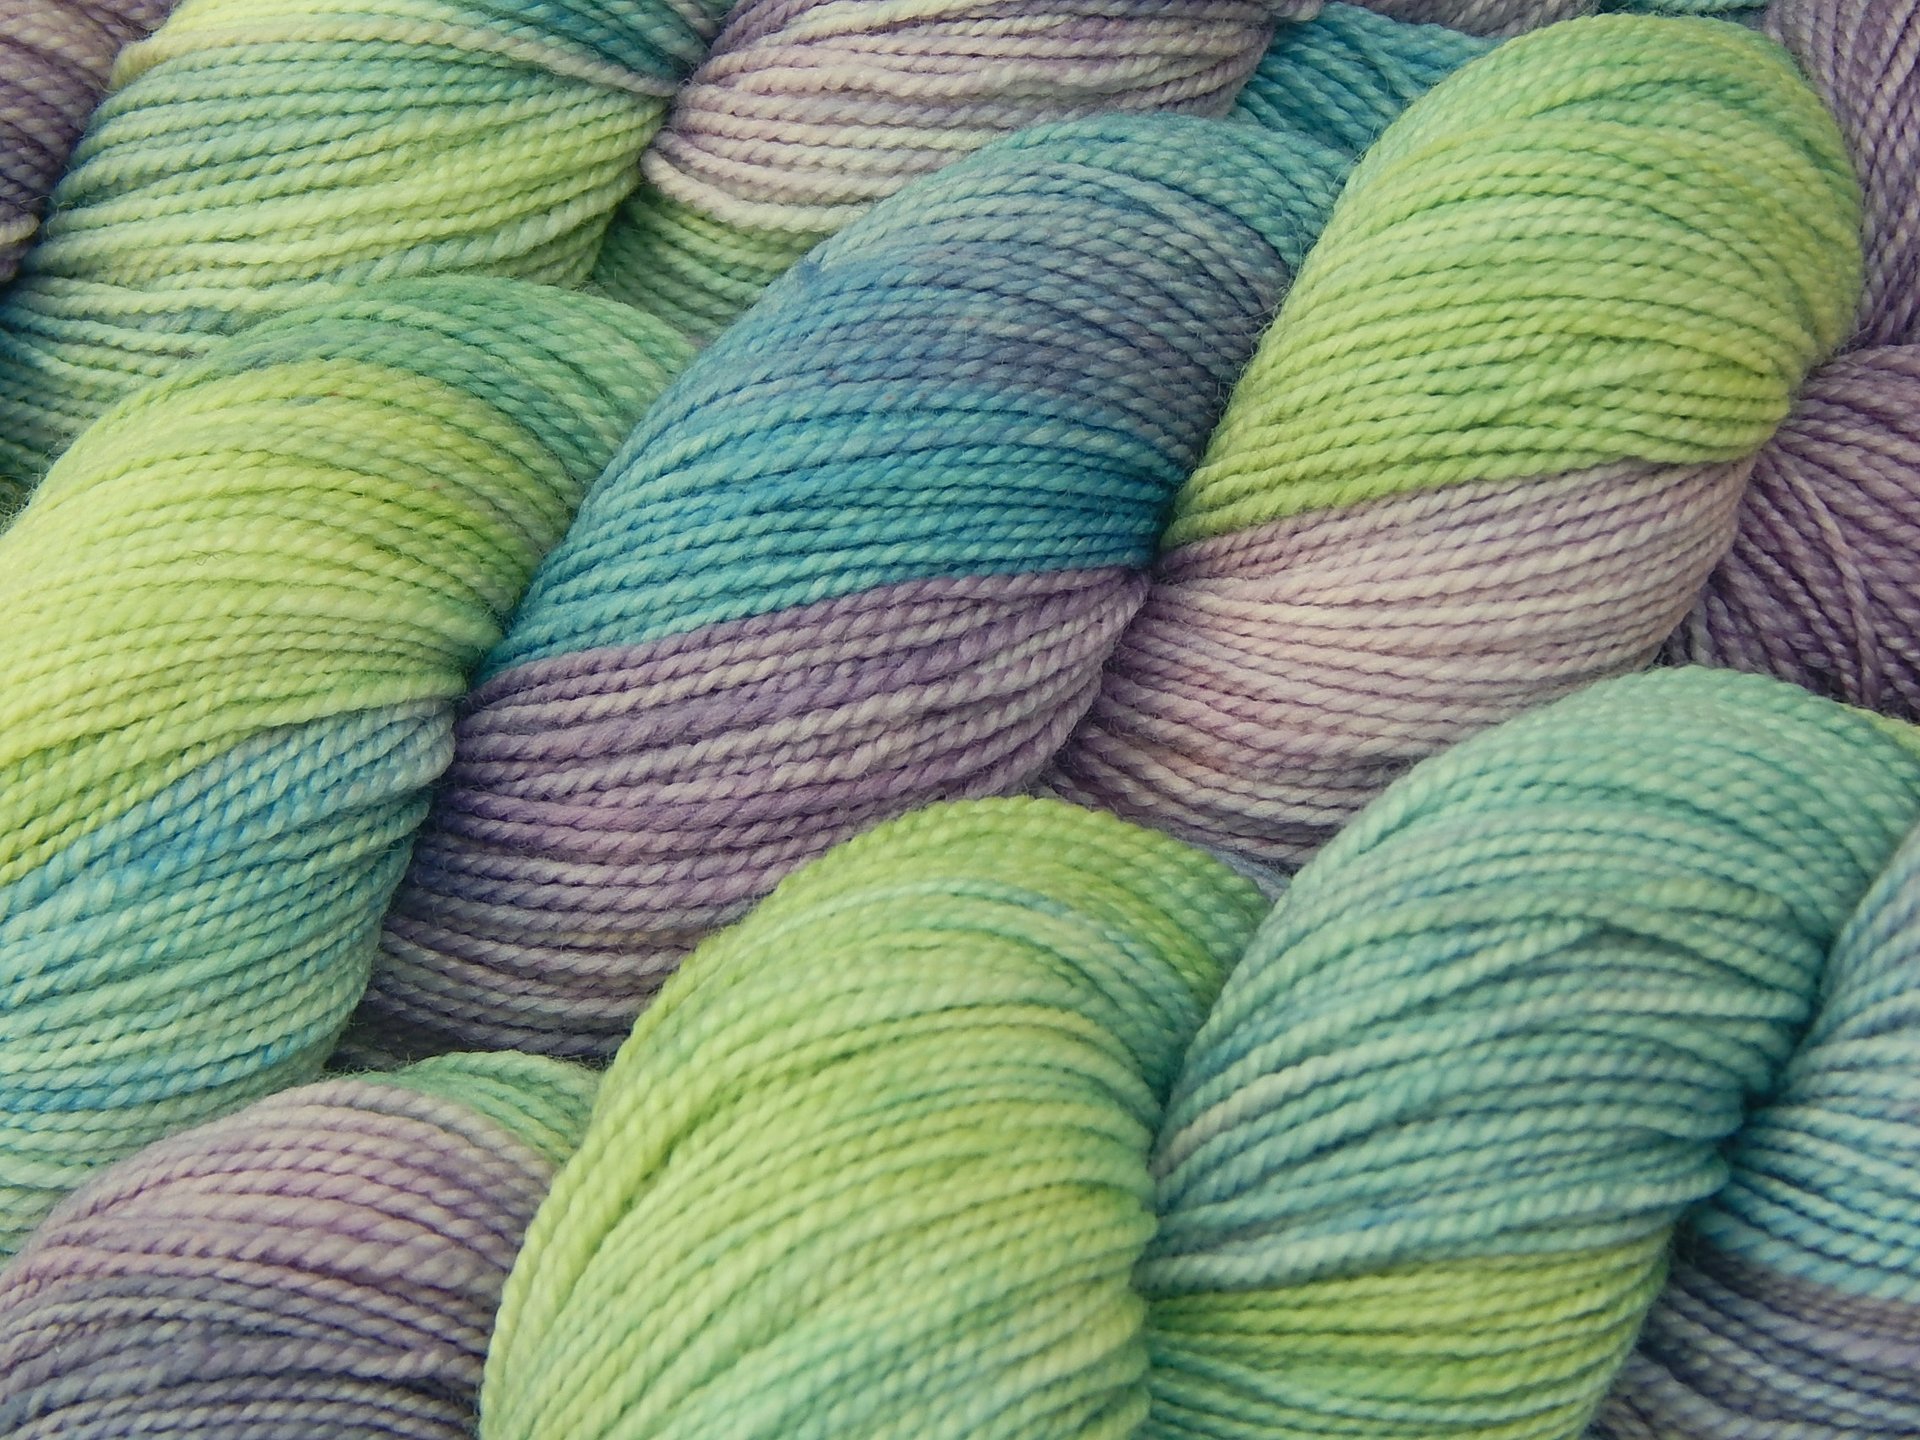 Hand Dyed Yarn, Sock Fingering Weight Superwash Merino Wool - Potluck Pastels - Springtime Knitting Yarn, Green Blue Lavender, Colorful Indie Dyer Sock Yarn